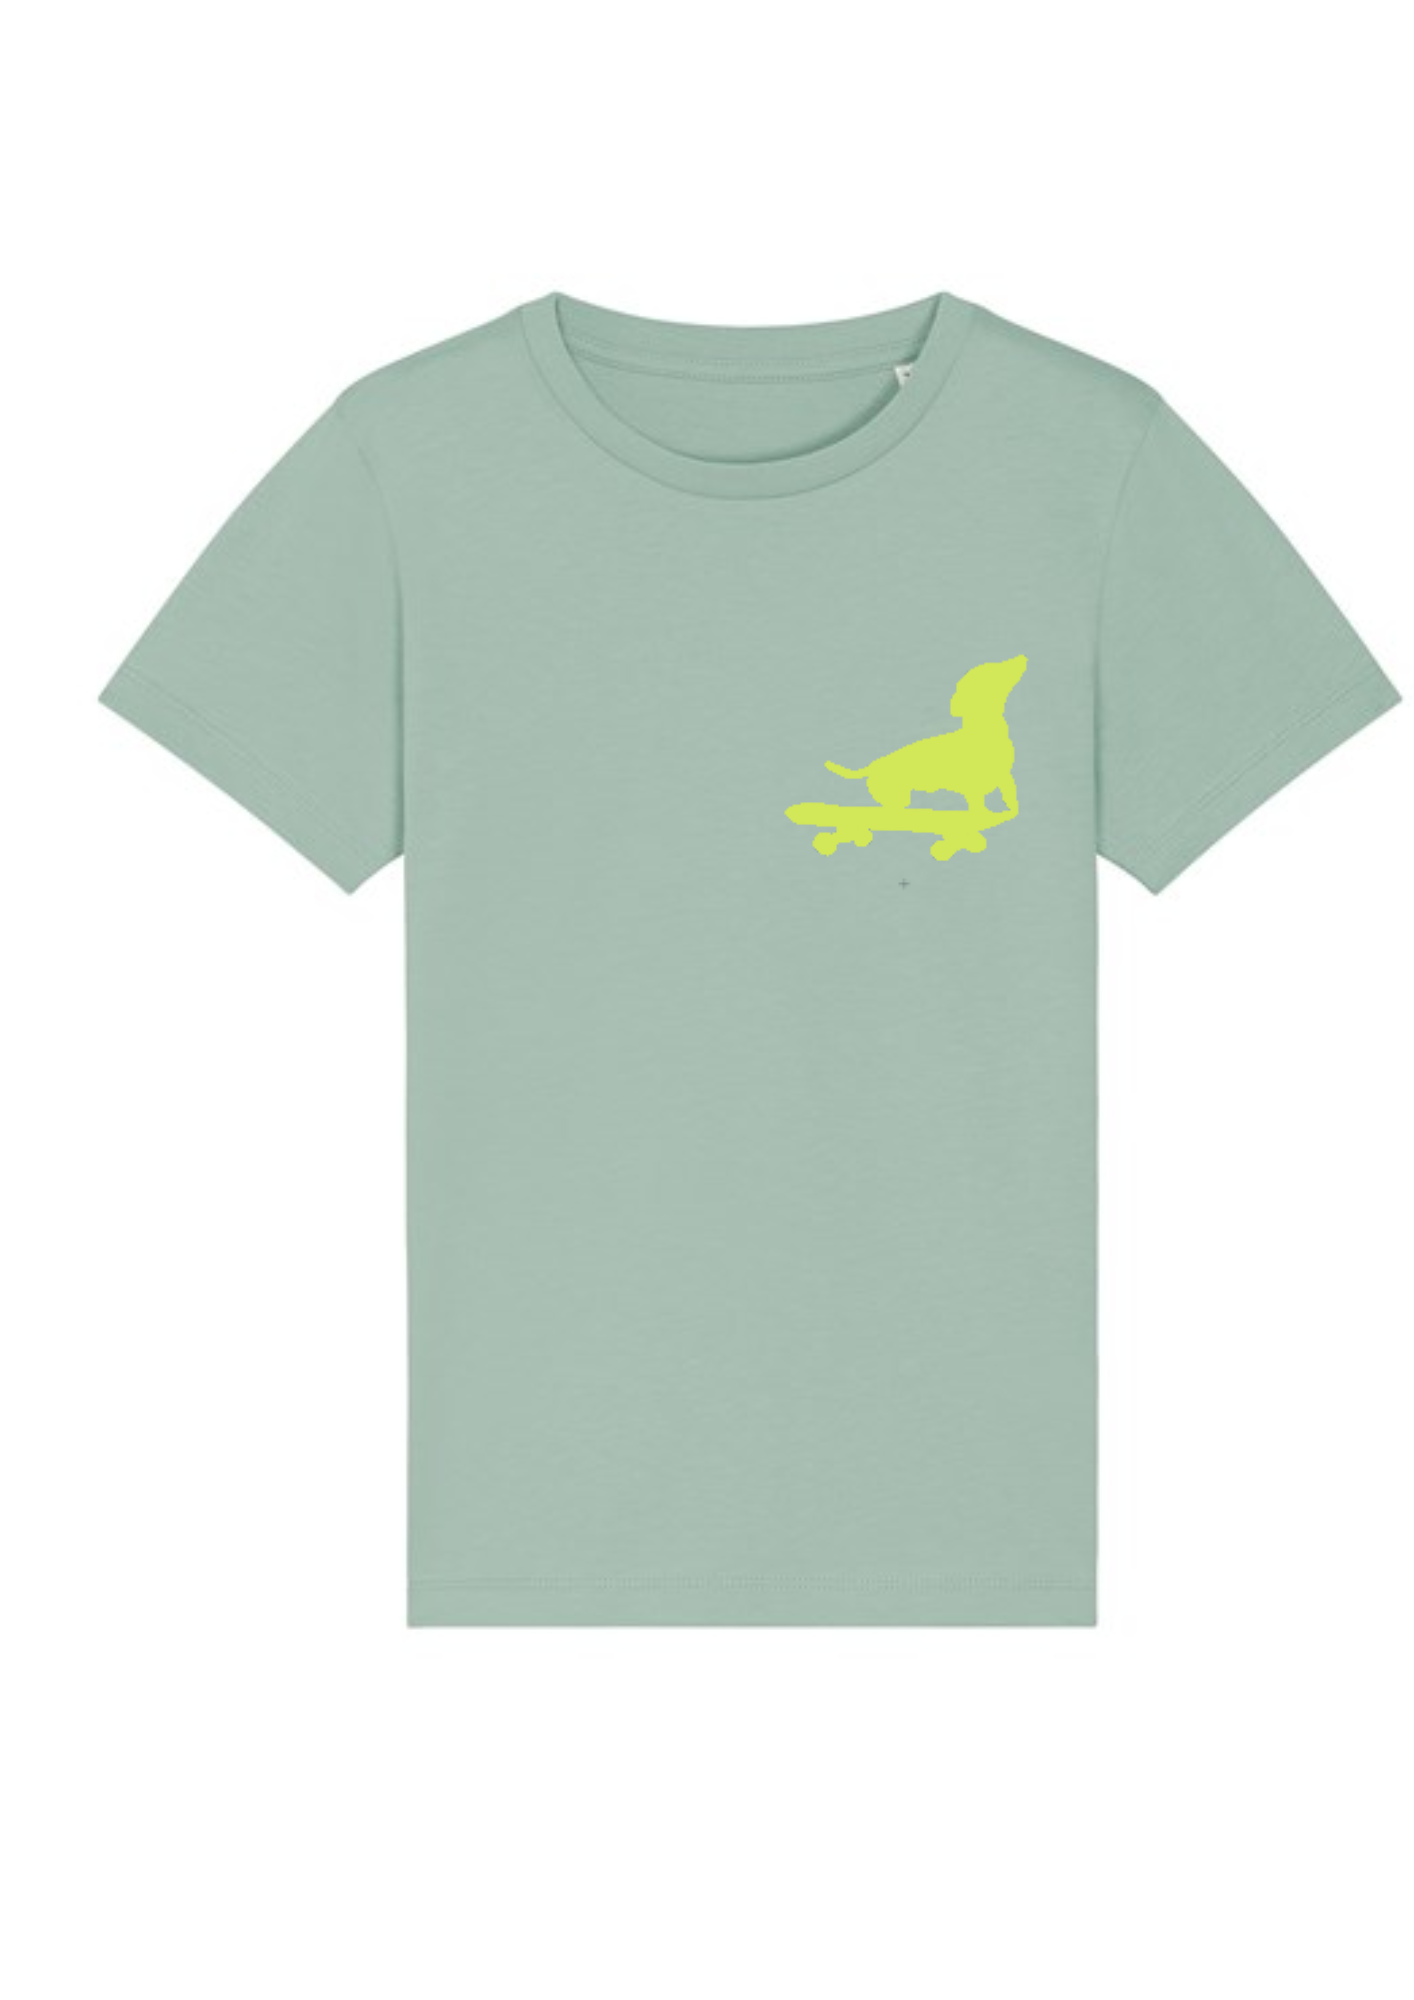 Dachshund on Skateboard T-shirt in Aloe and Lemon